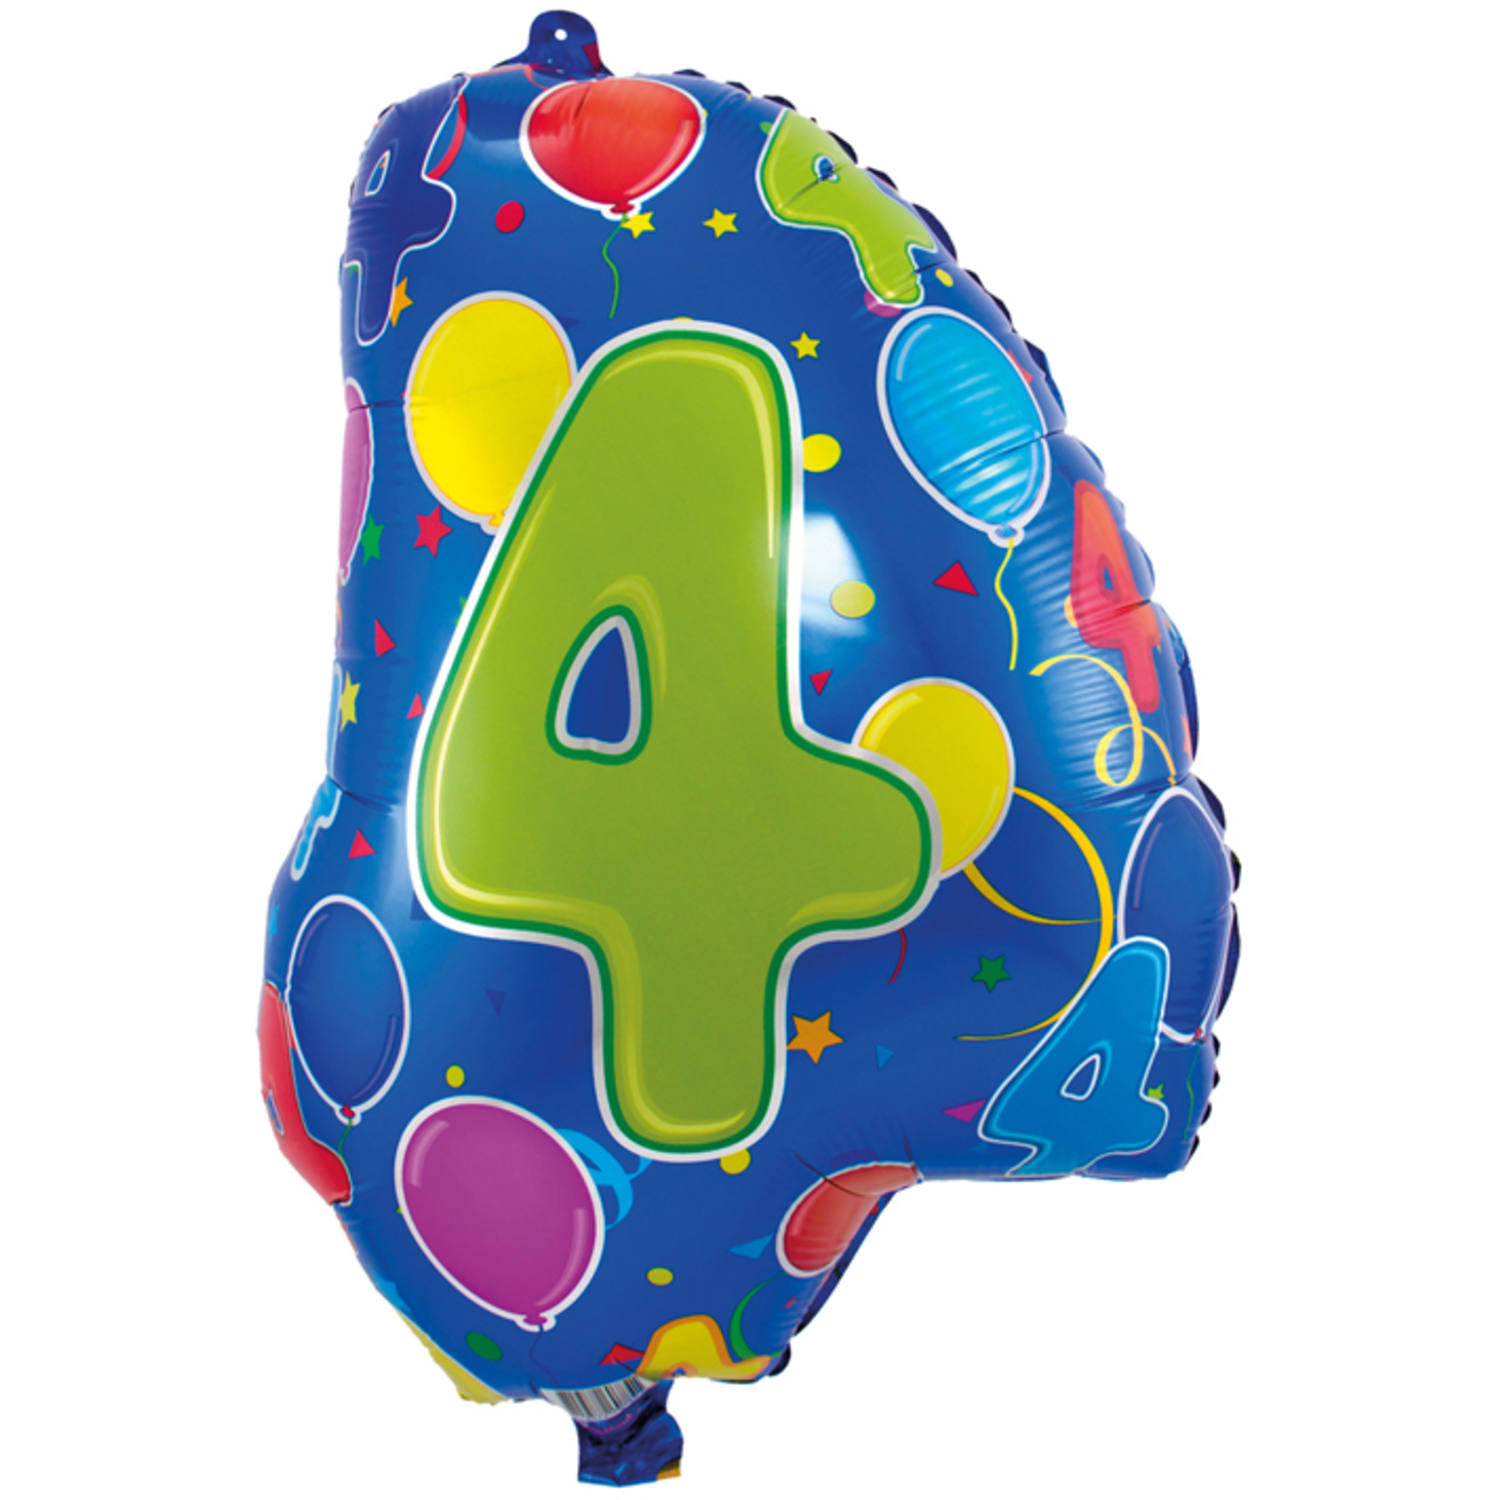 Folienballon  Zahl 4  - grün/blau - 56cm (Unverpackt)